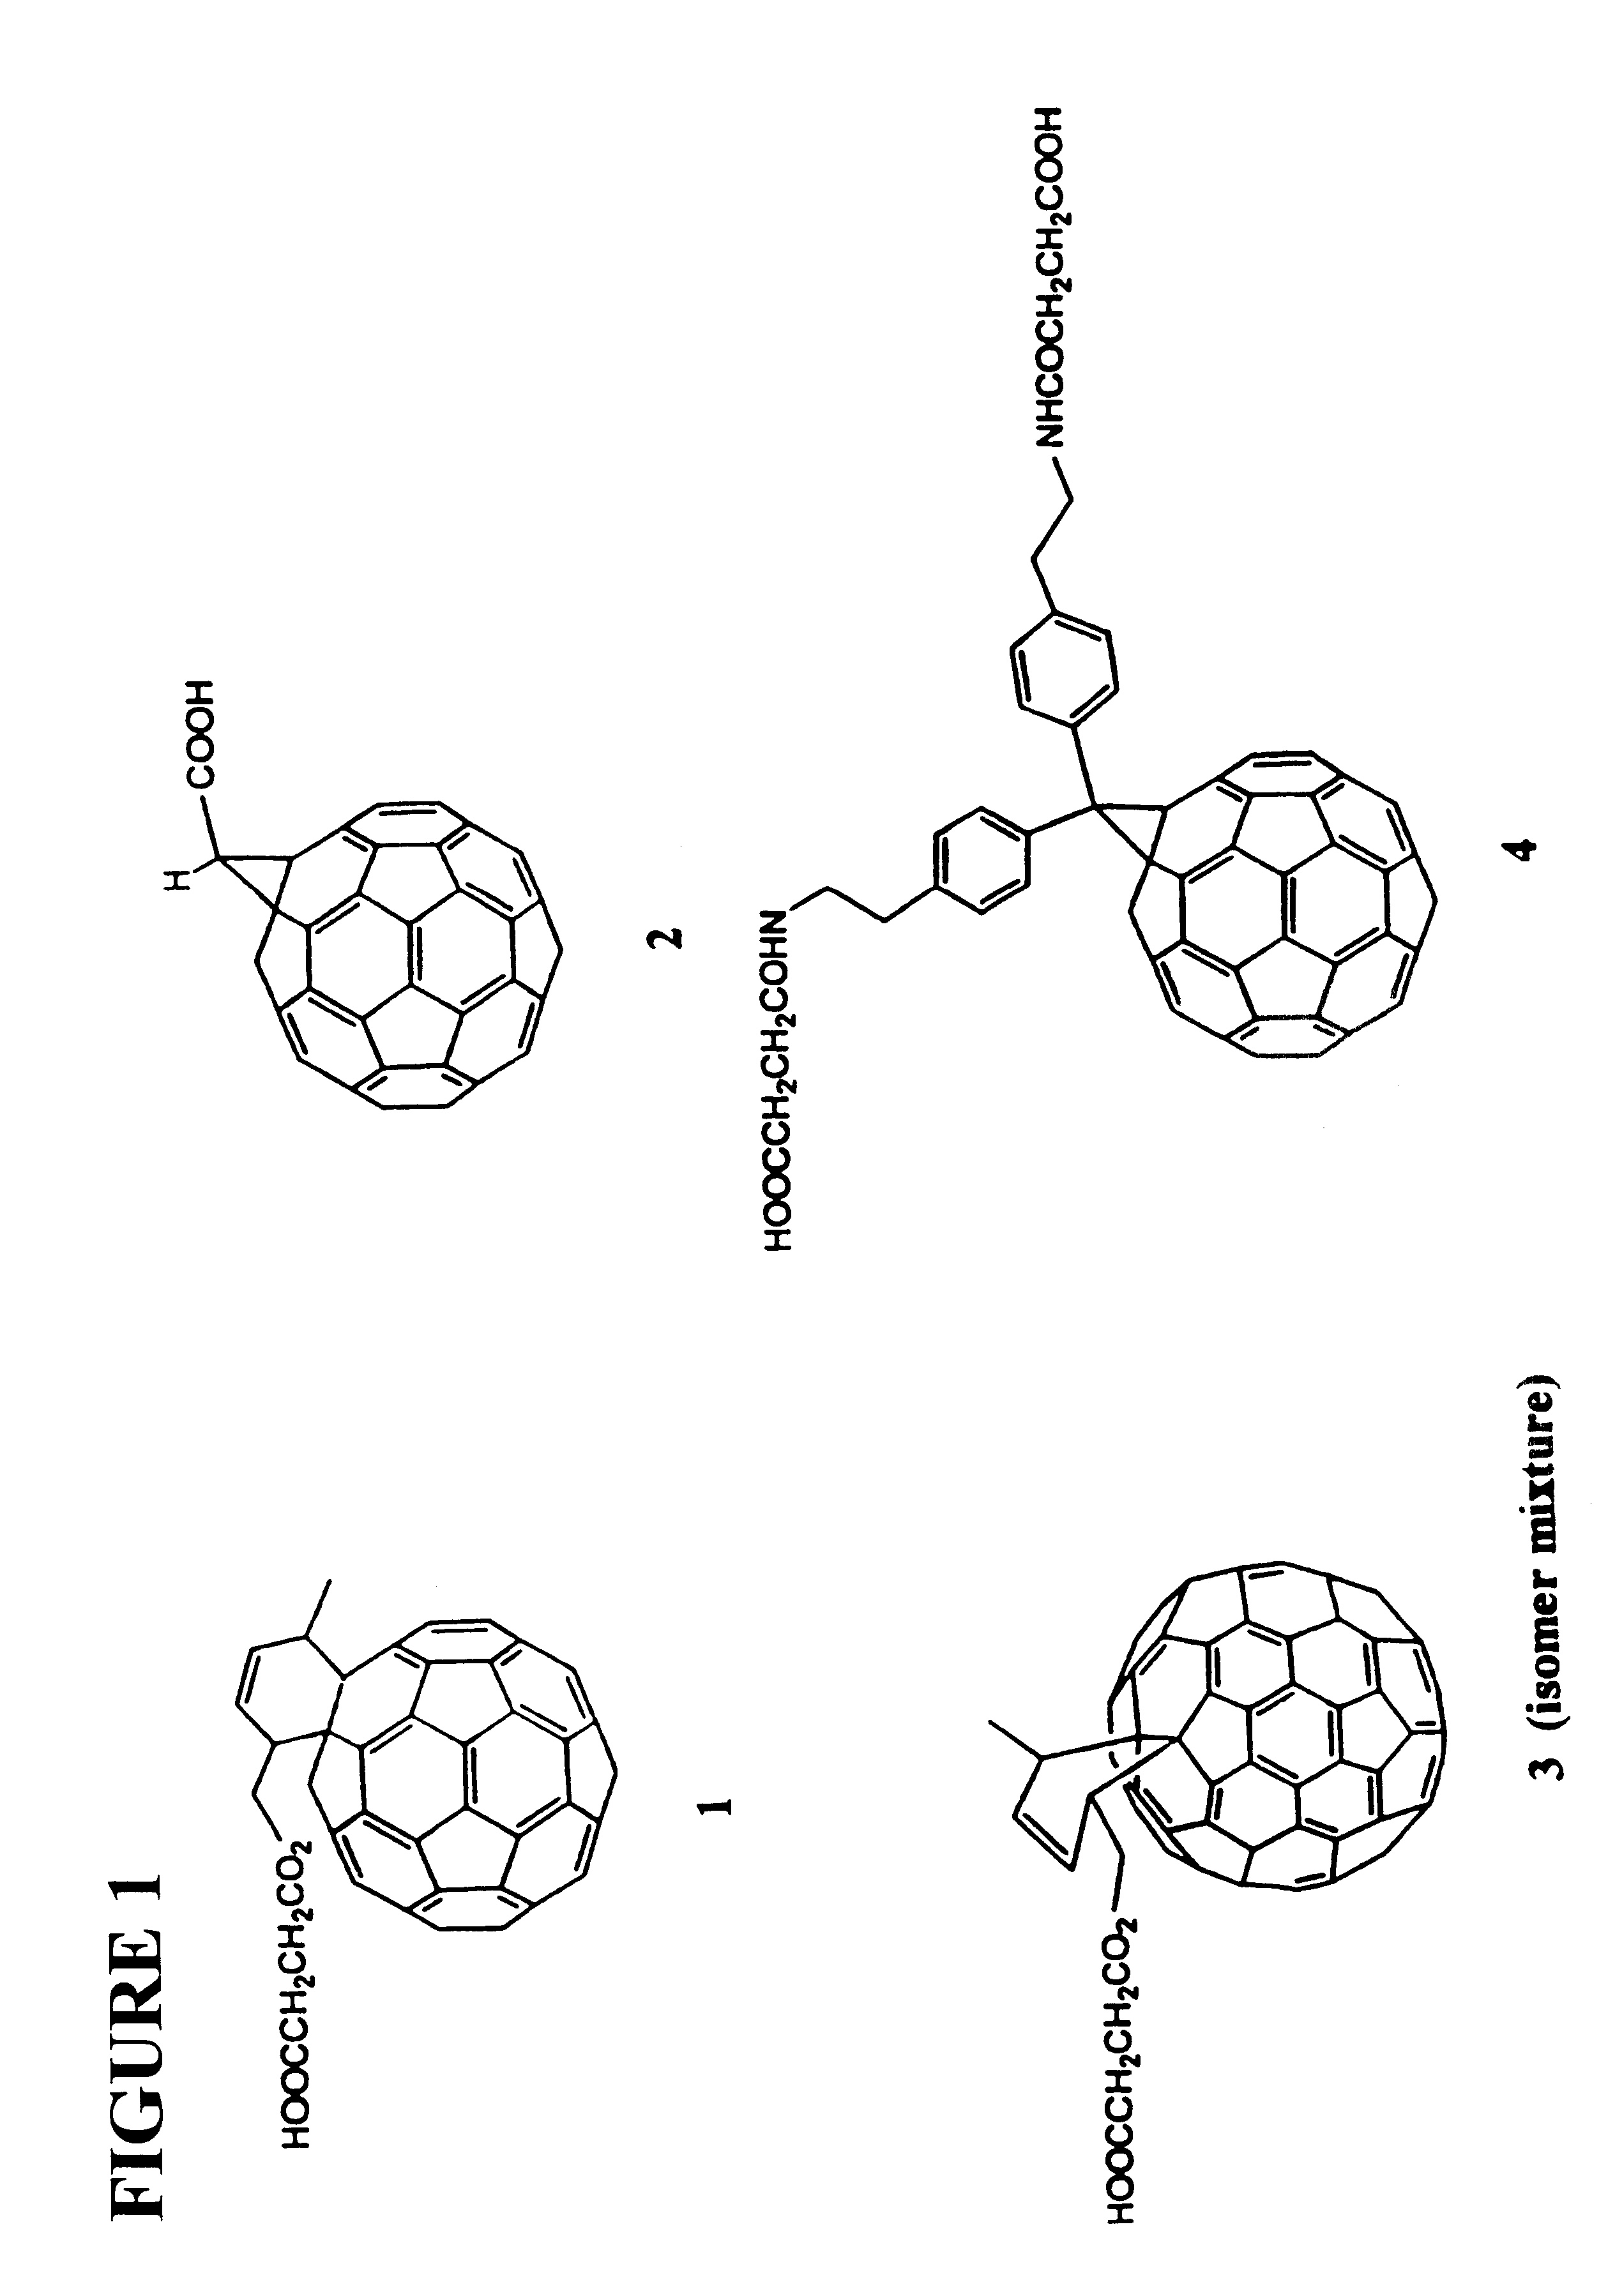 Antibodies specific for fullerenes